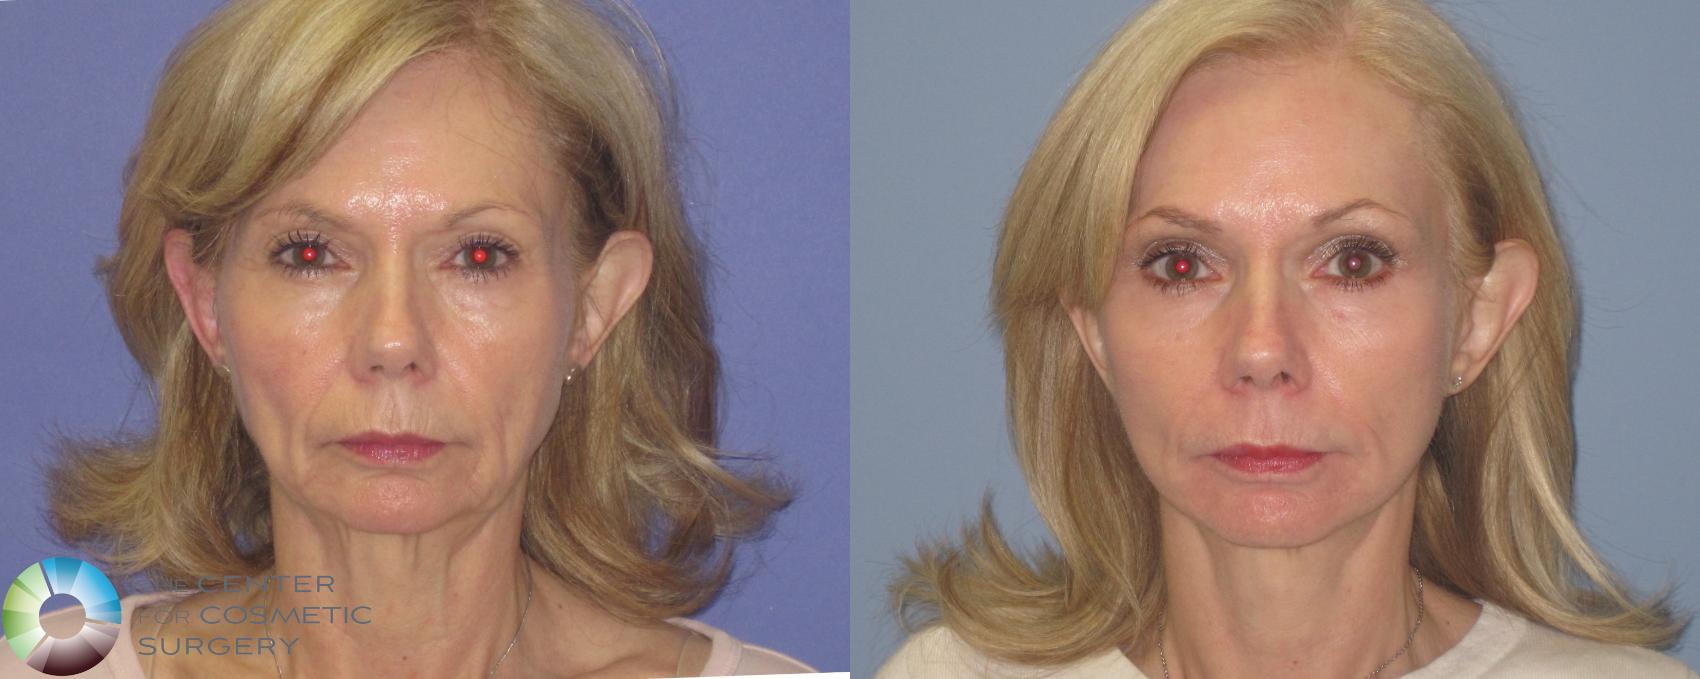 Before & After Laser Skin Resurfacing Case 460 View #1 in Denver, CO